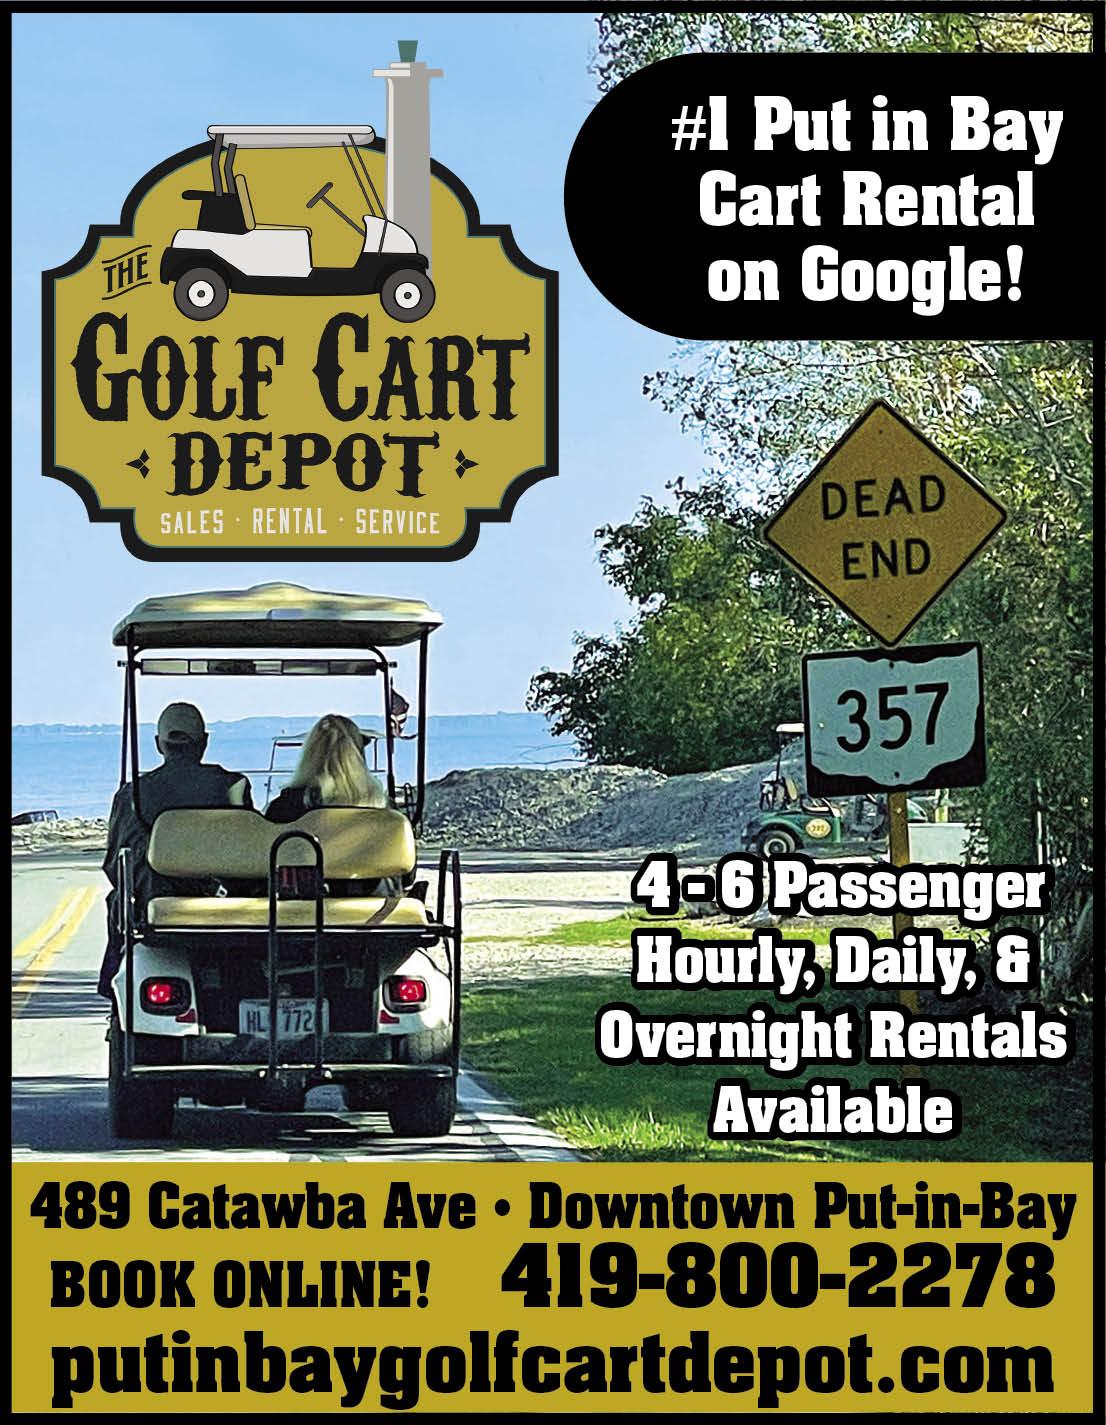 The Golf Cart Depot ~ Put-in-Bay